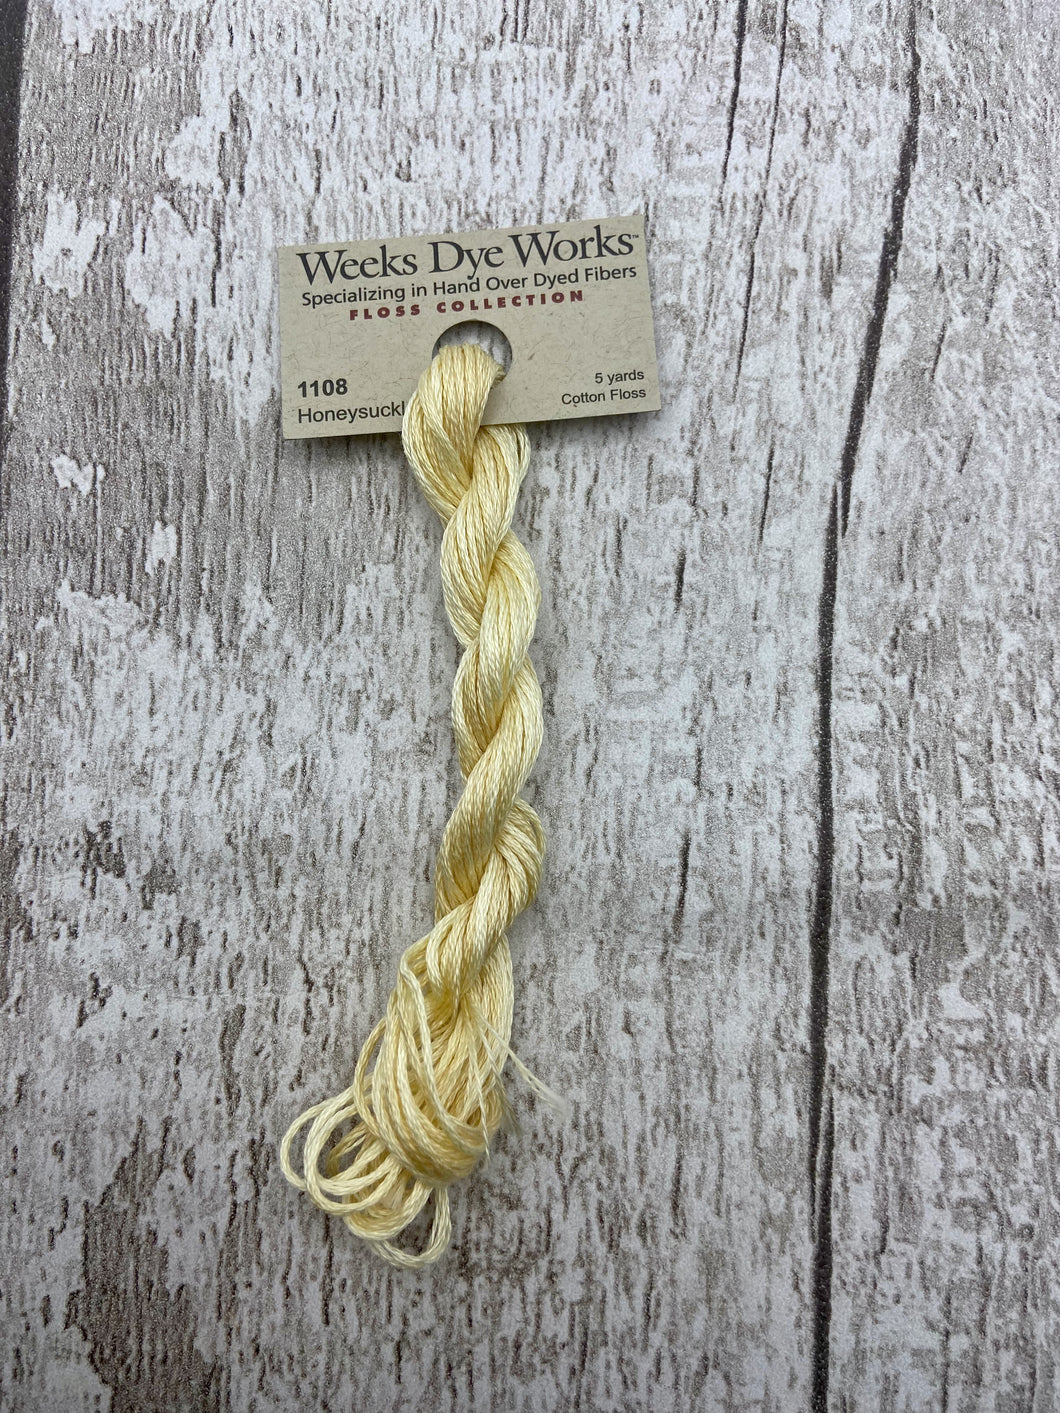 Honeysuckle (#1108) Weeks Dye Works, 6-strand cotton floss